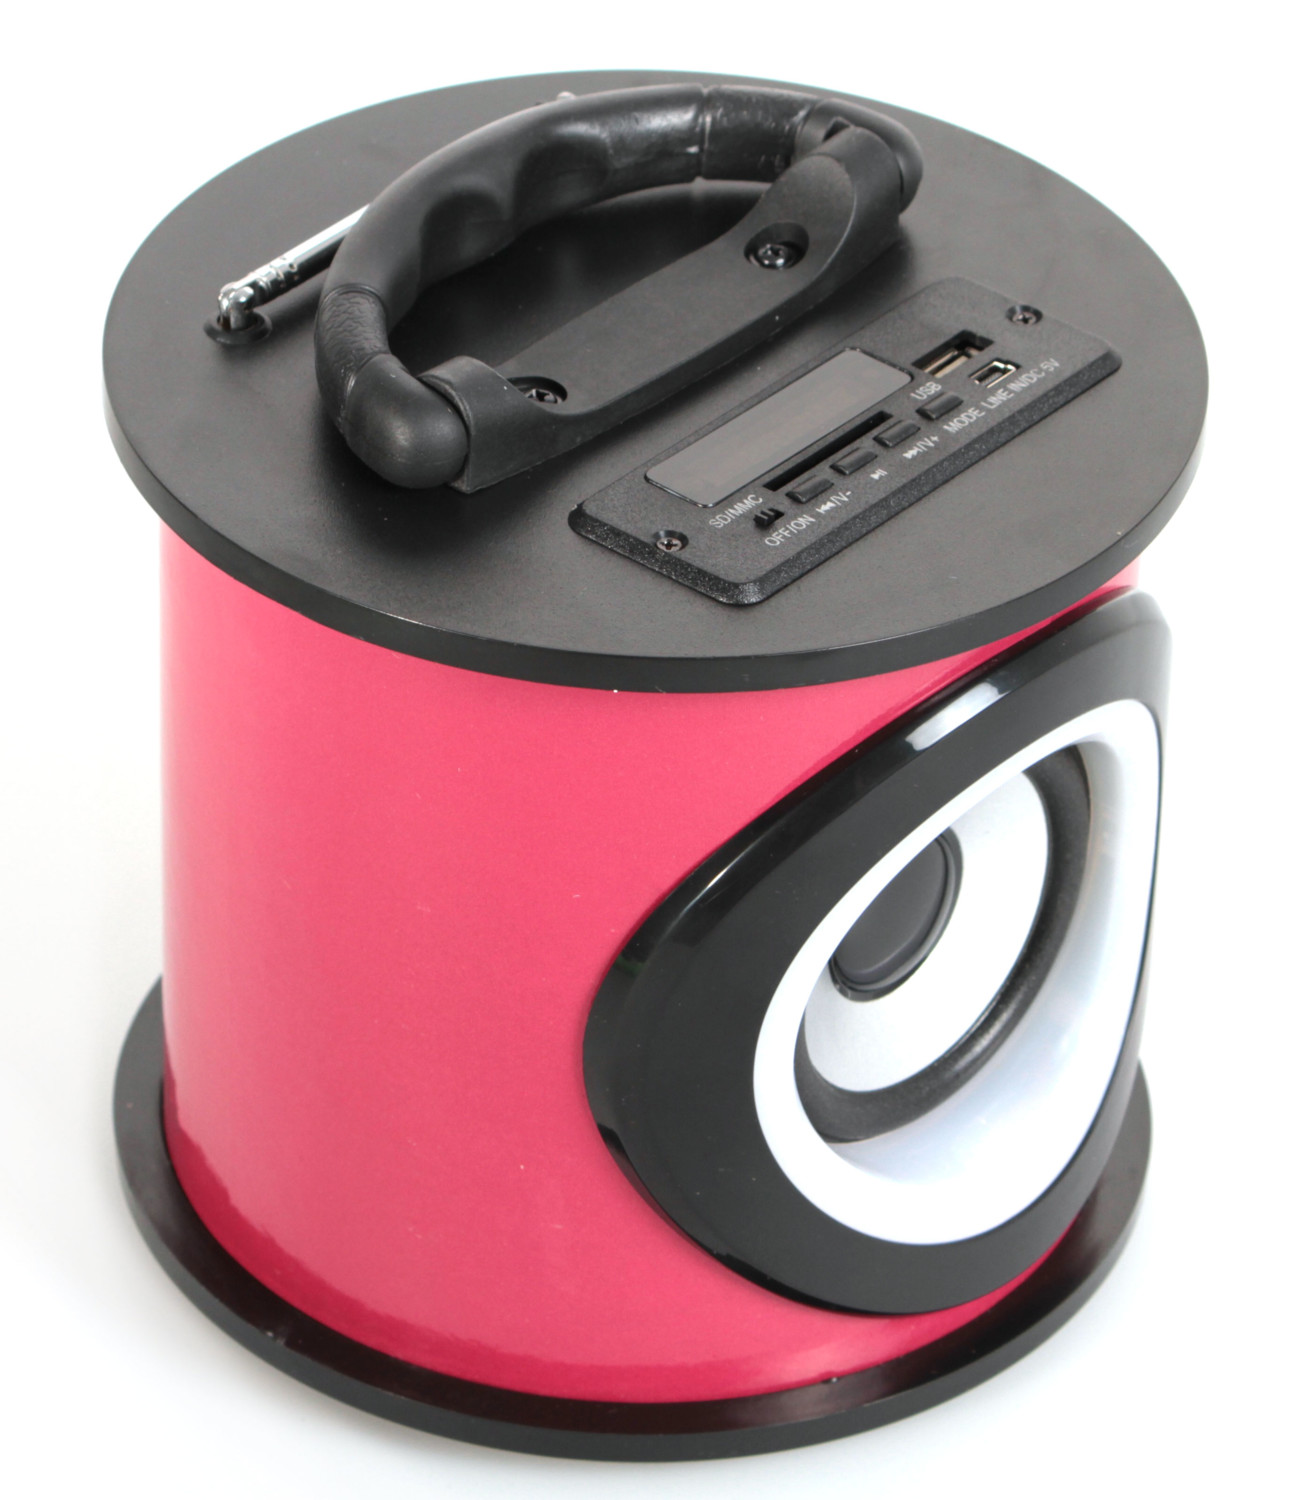 LECTEUR RADIO CD PORTABLE USB ROSE + SPEAKERS LUMINEUX